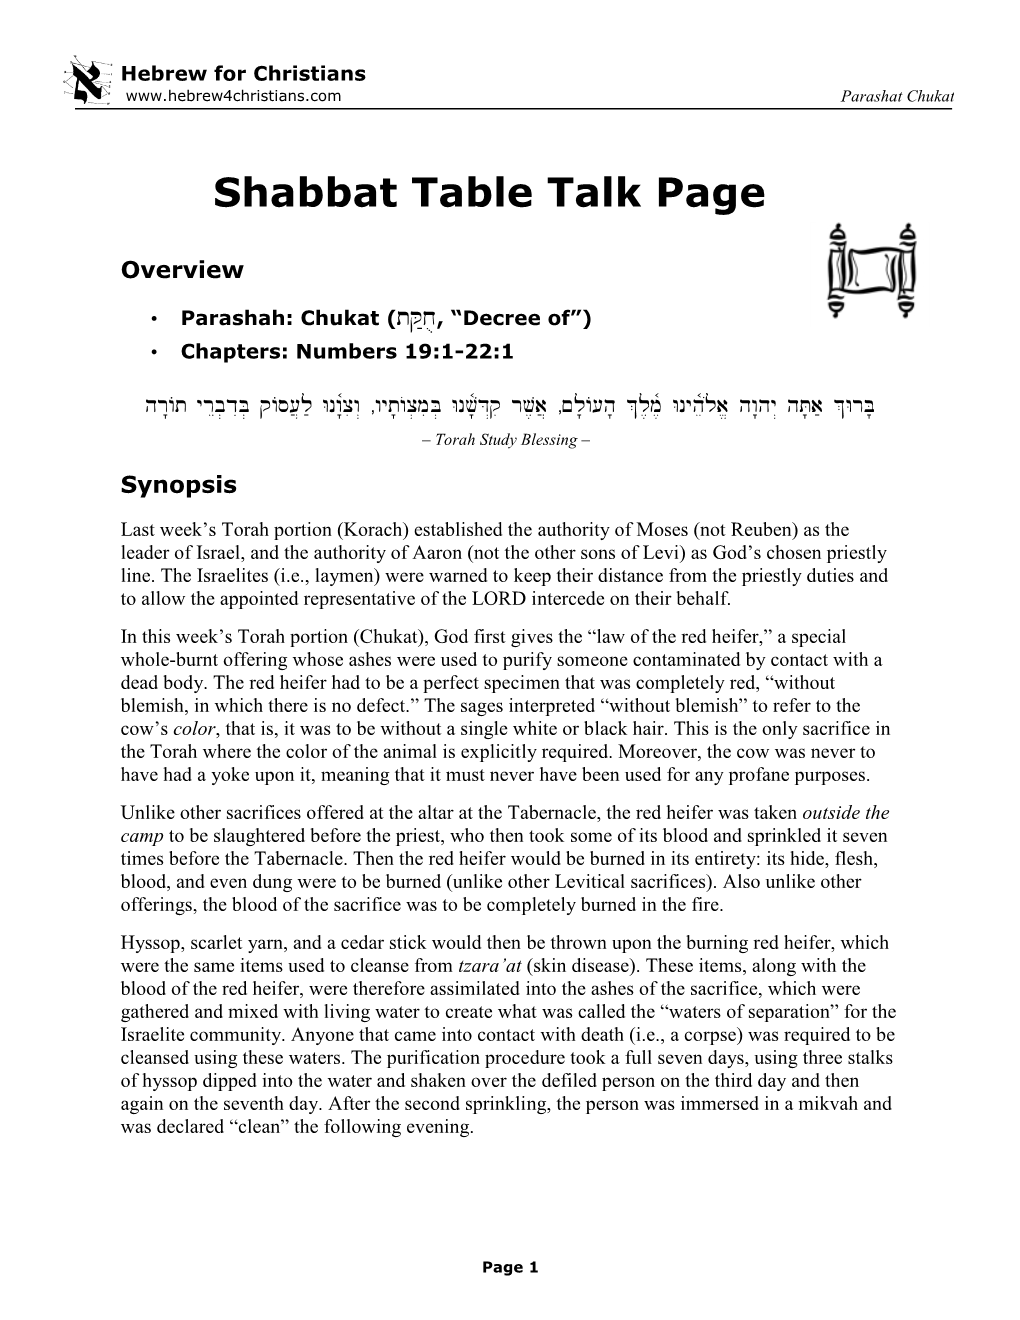 Shabbat Table Talk for Chukat